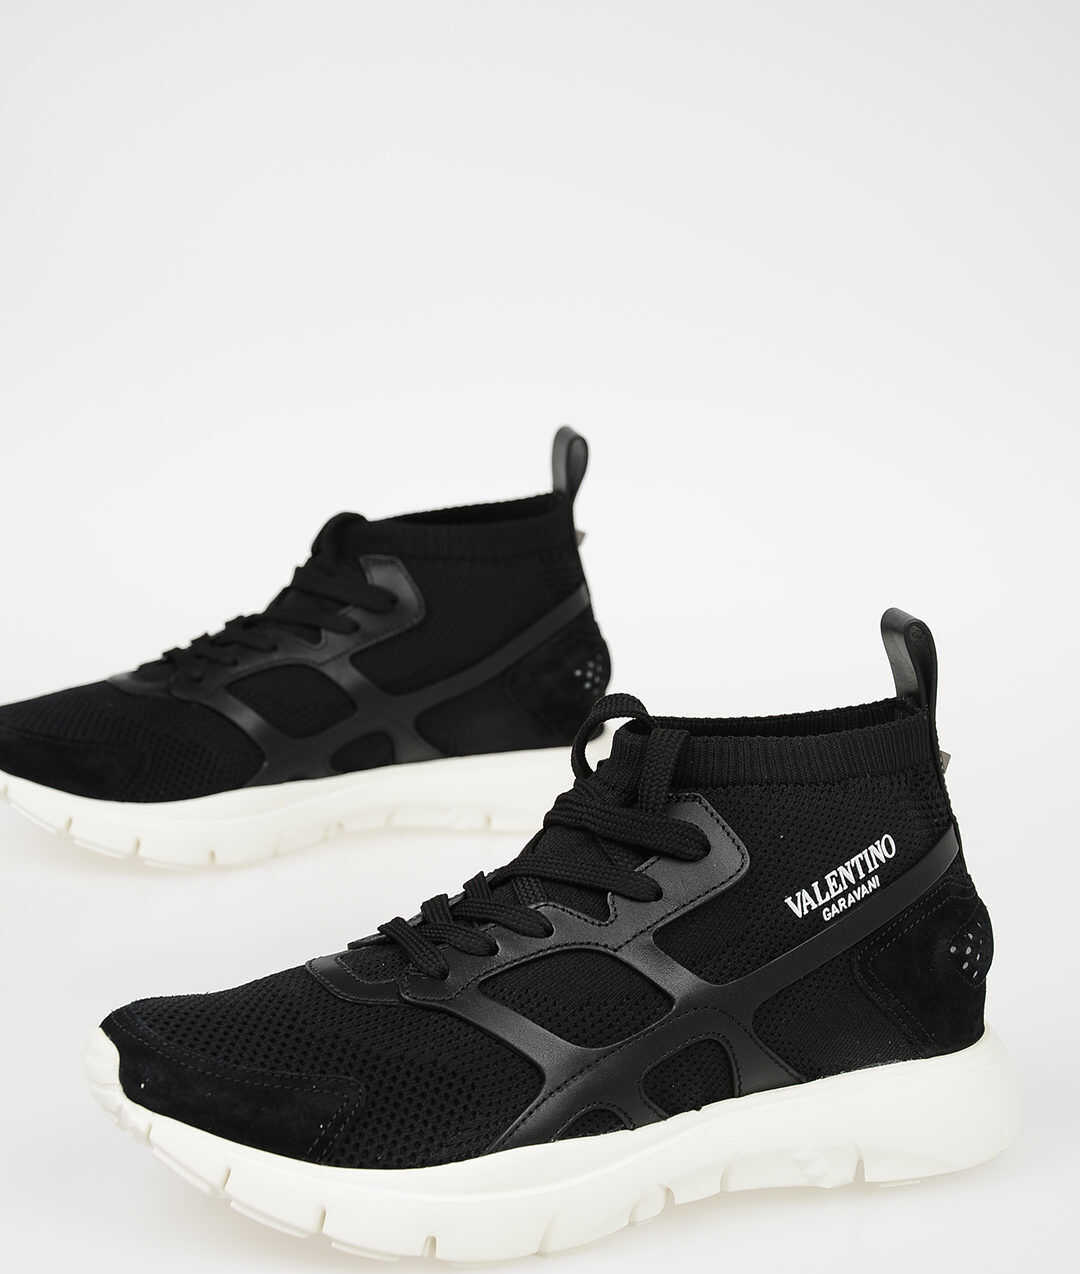 Valentino Garavani GARAVANI Fabric Sneakers BLACK